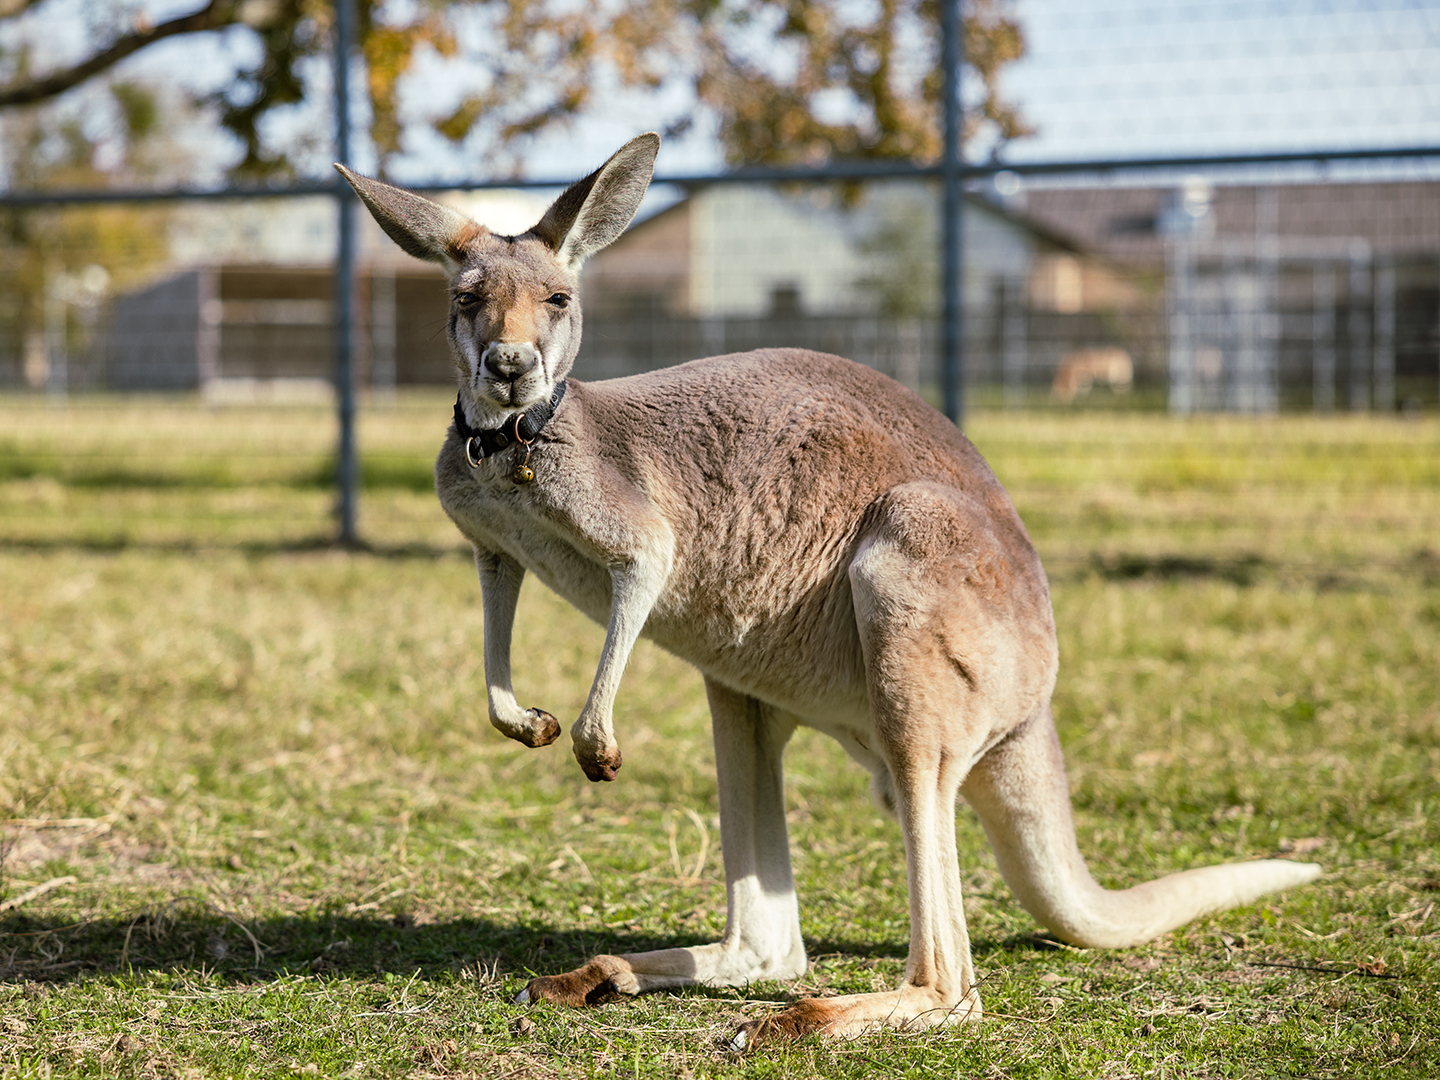 A kangaroo wearing a black collar with bells